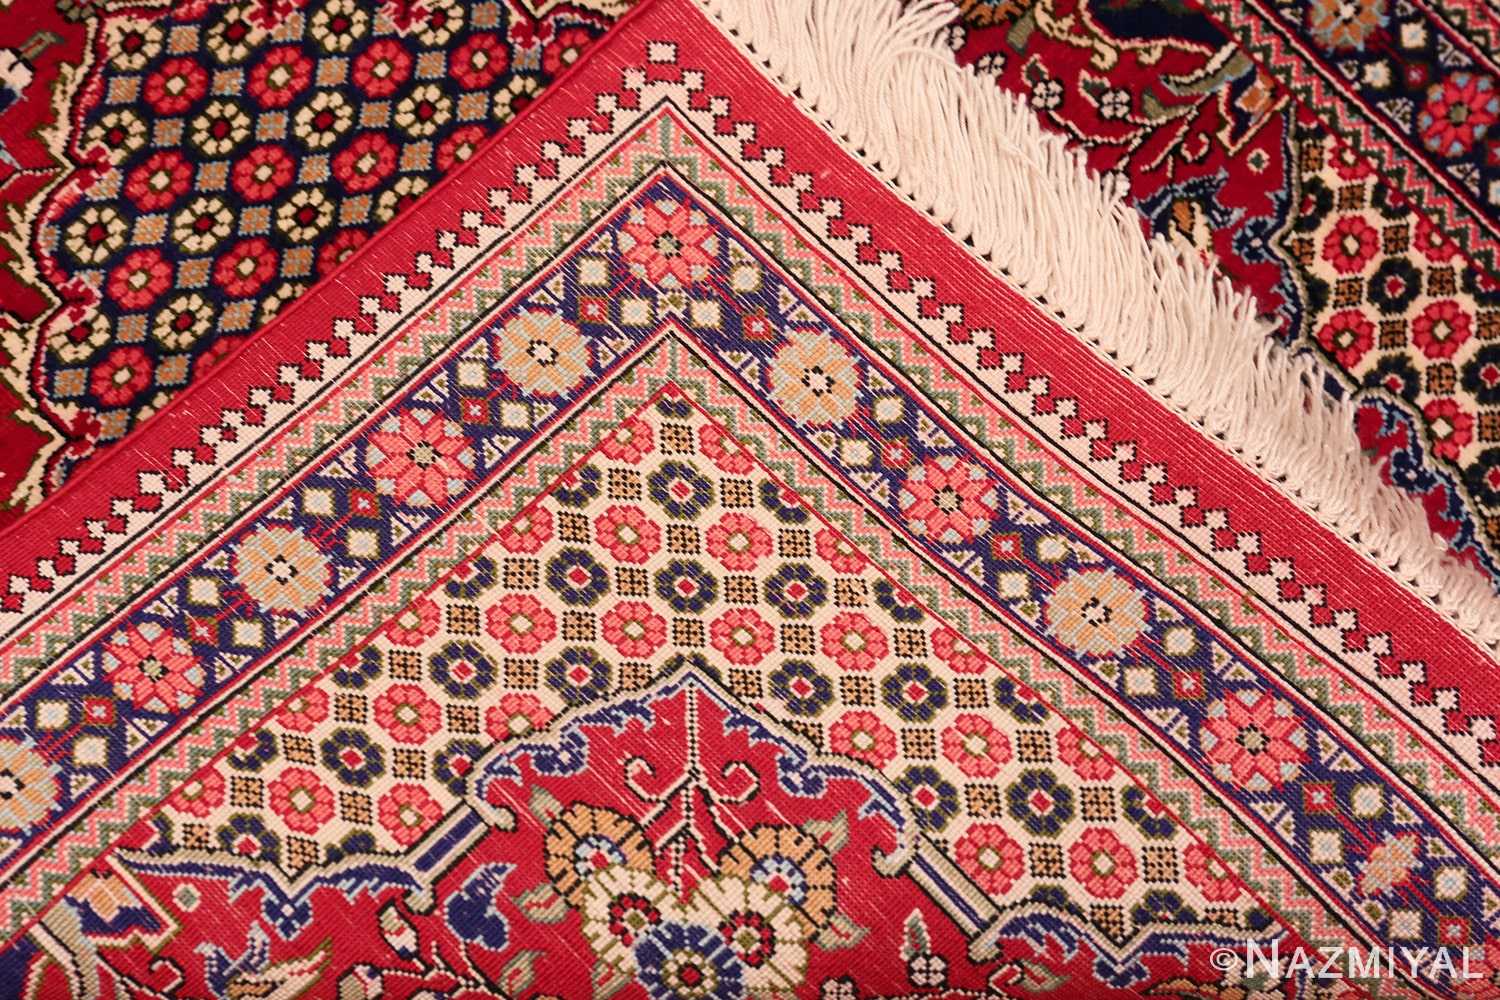 Weave Of Vase Design Small Vintage Persian Silk Qum Rug 70783 by Nazmiyal NYC